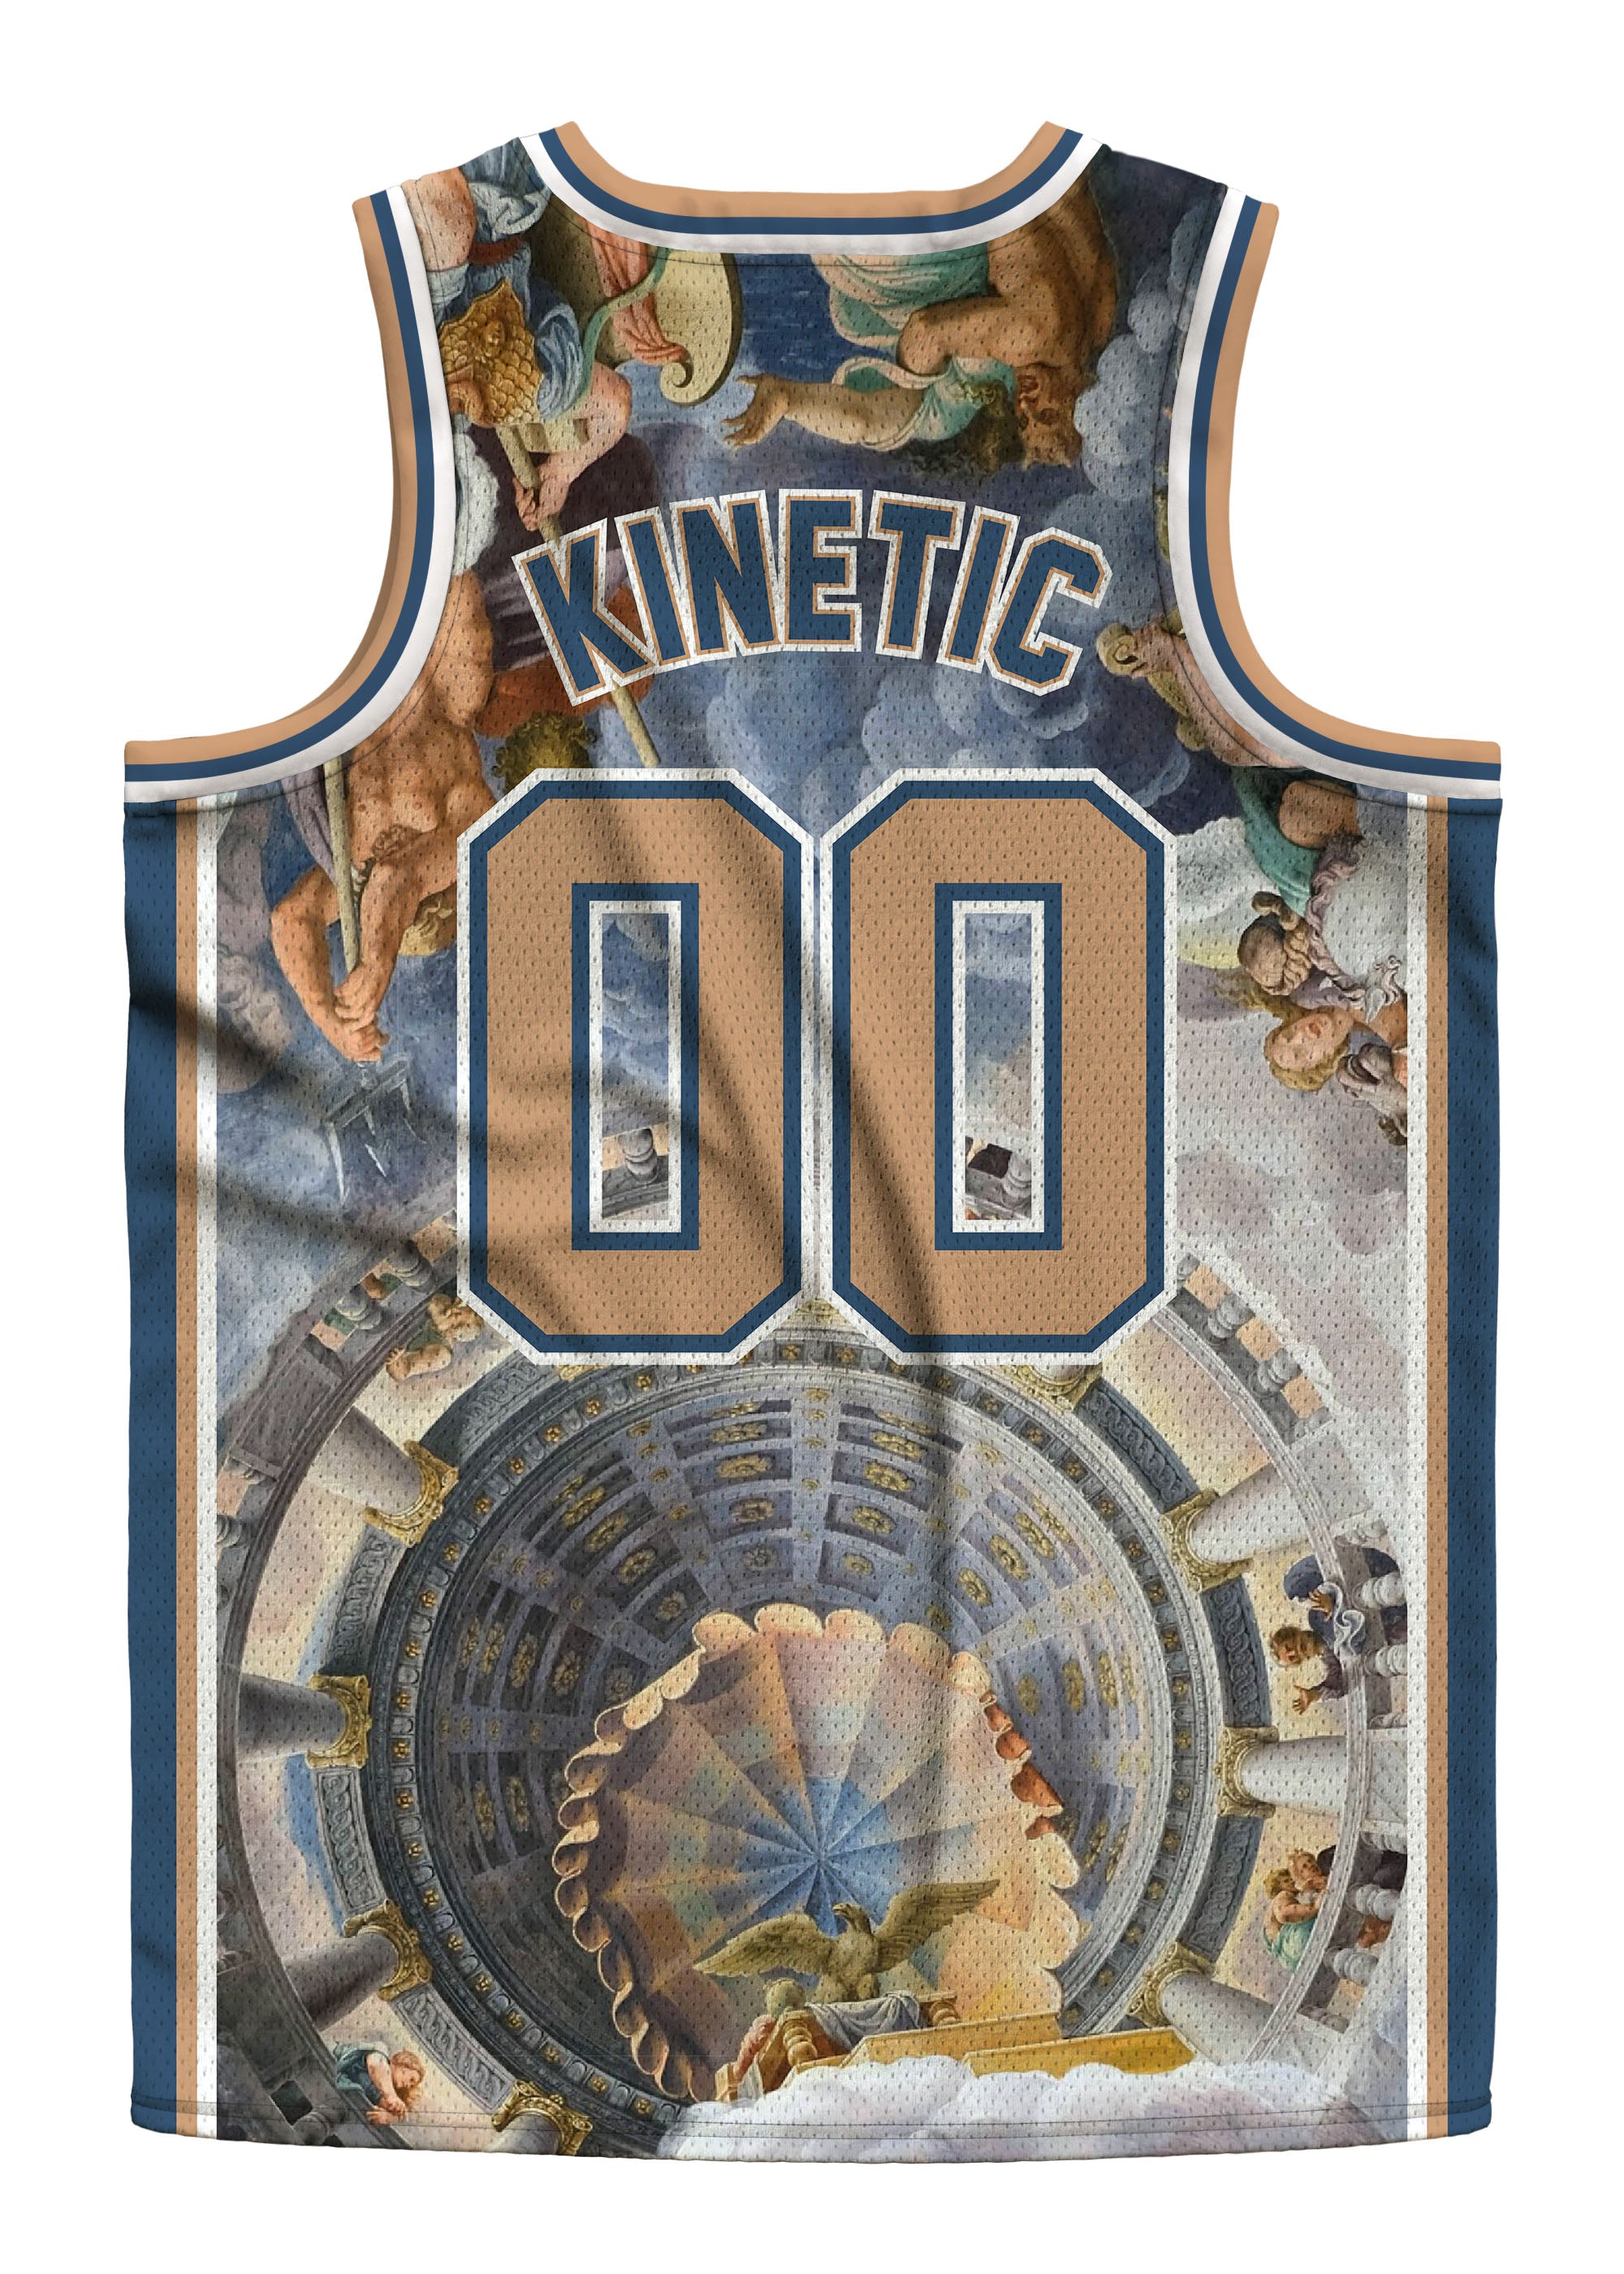 Phi Kappa Tau - NY Basketball Jersey